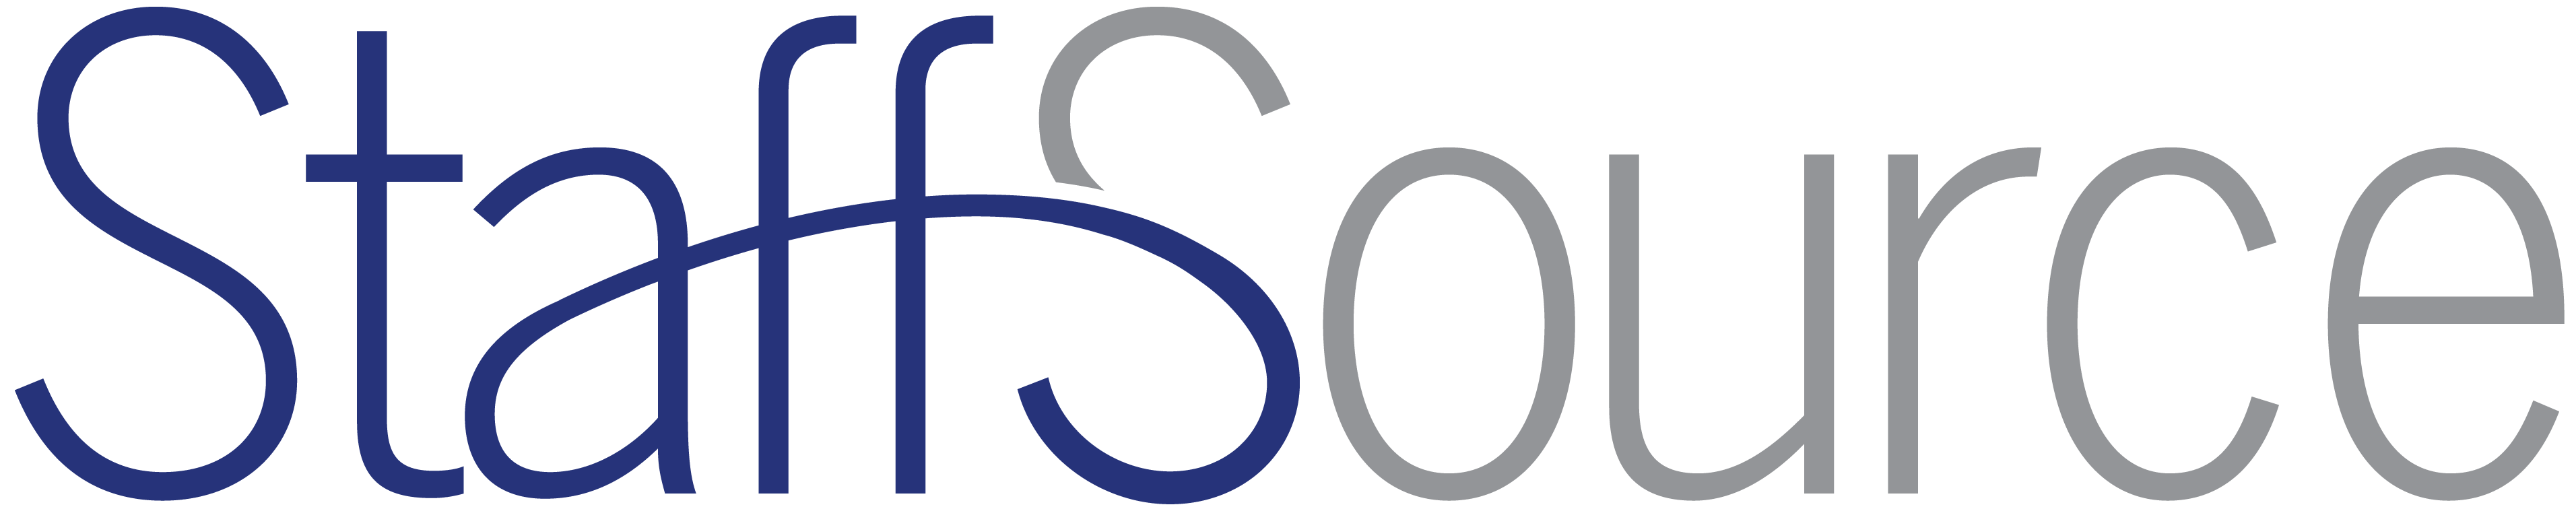 StaffSource logo